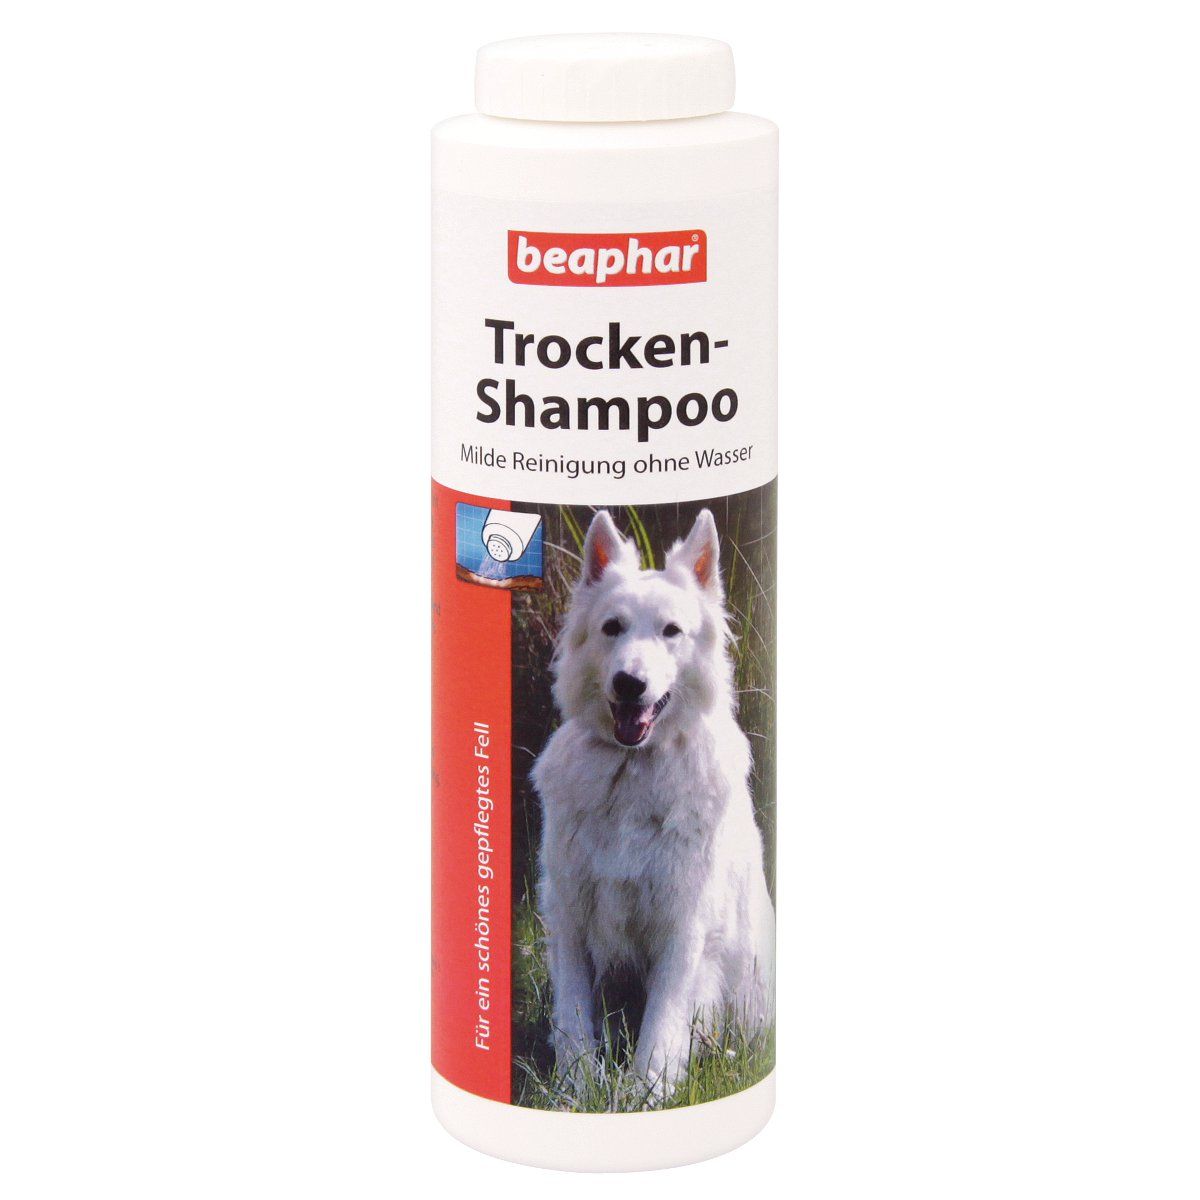 Beaphar - Trocken-Shampoo für Hunde